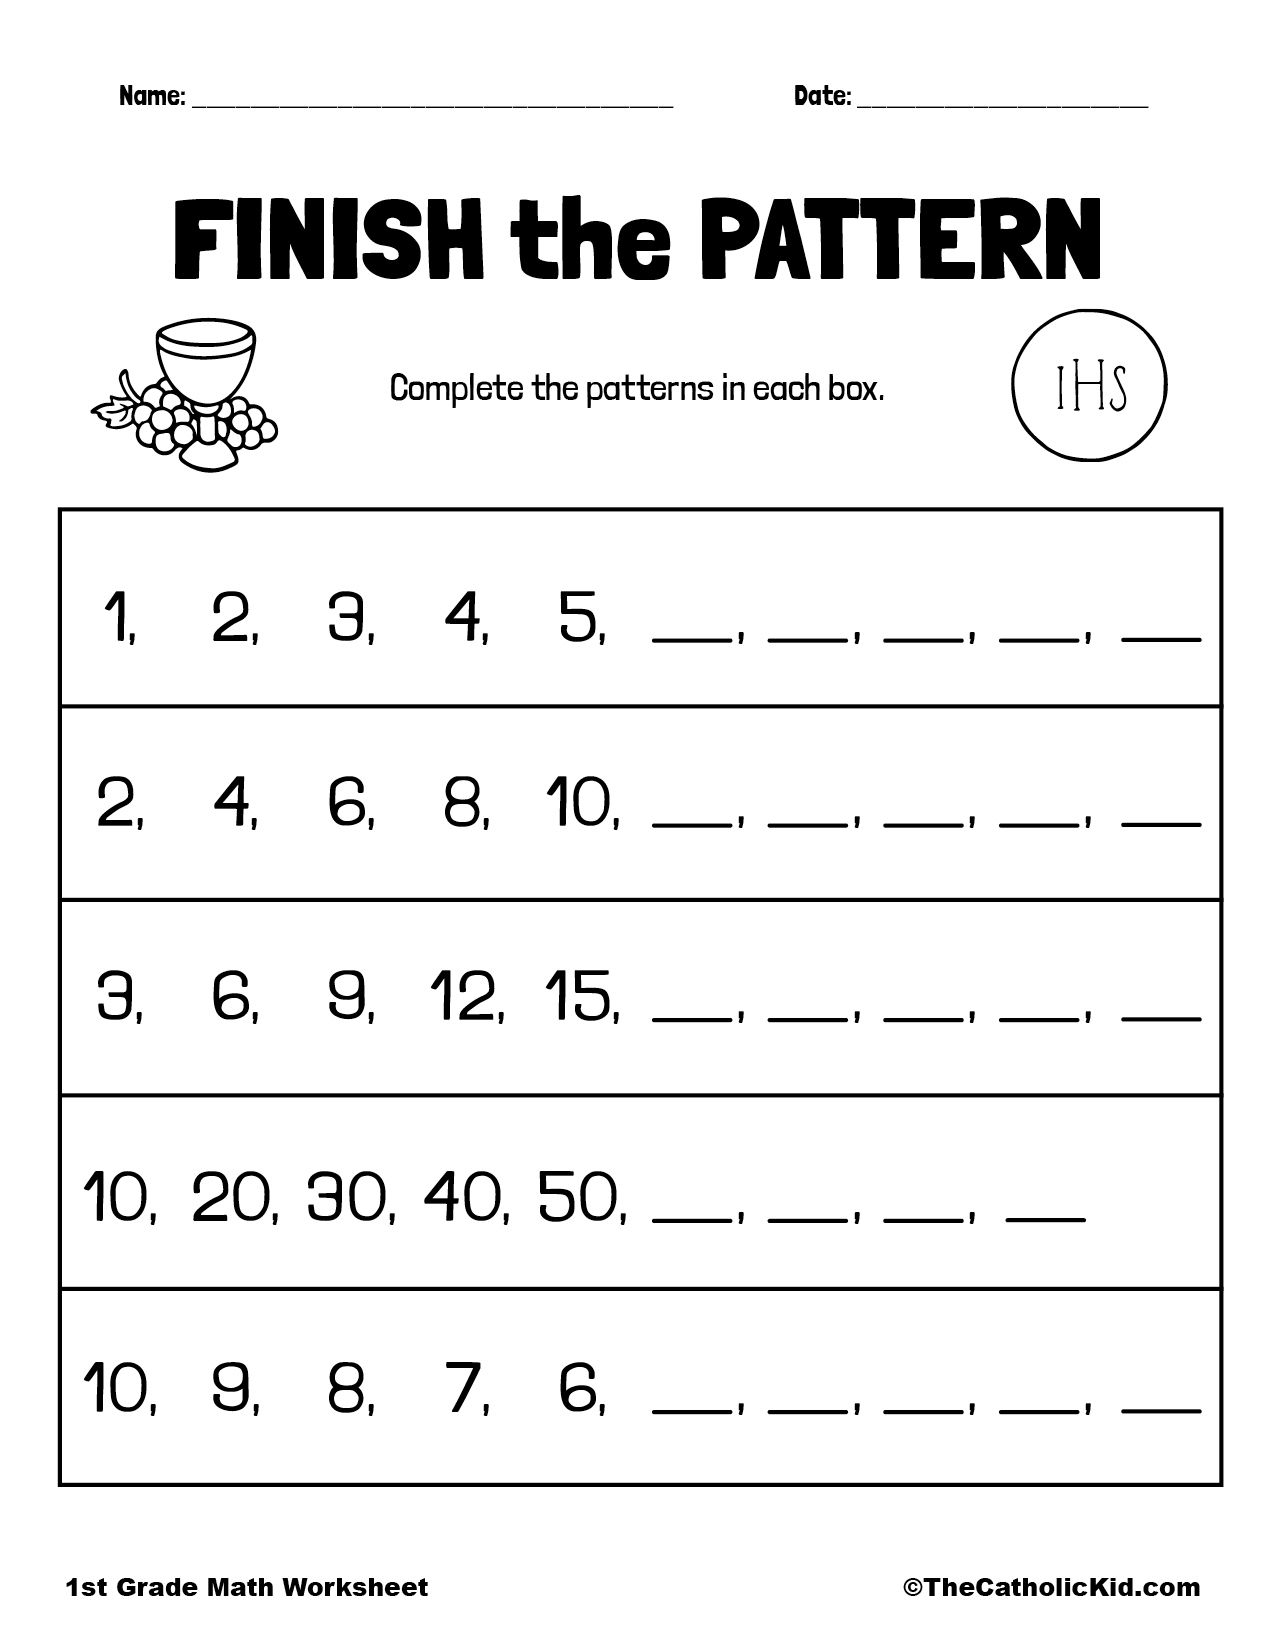 math-pattern-worksheets-1st-grade-1st-grade-math-worksheets